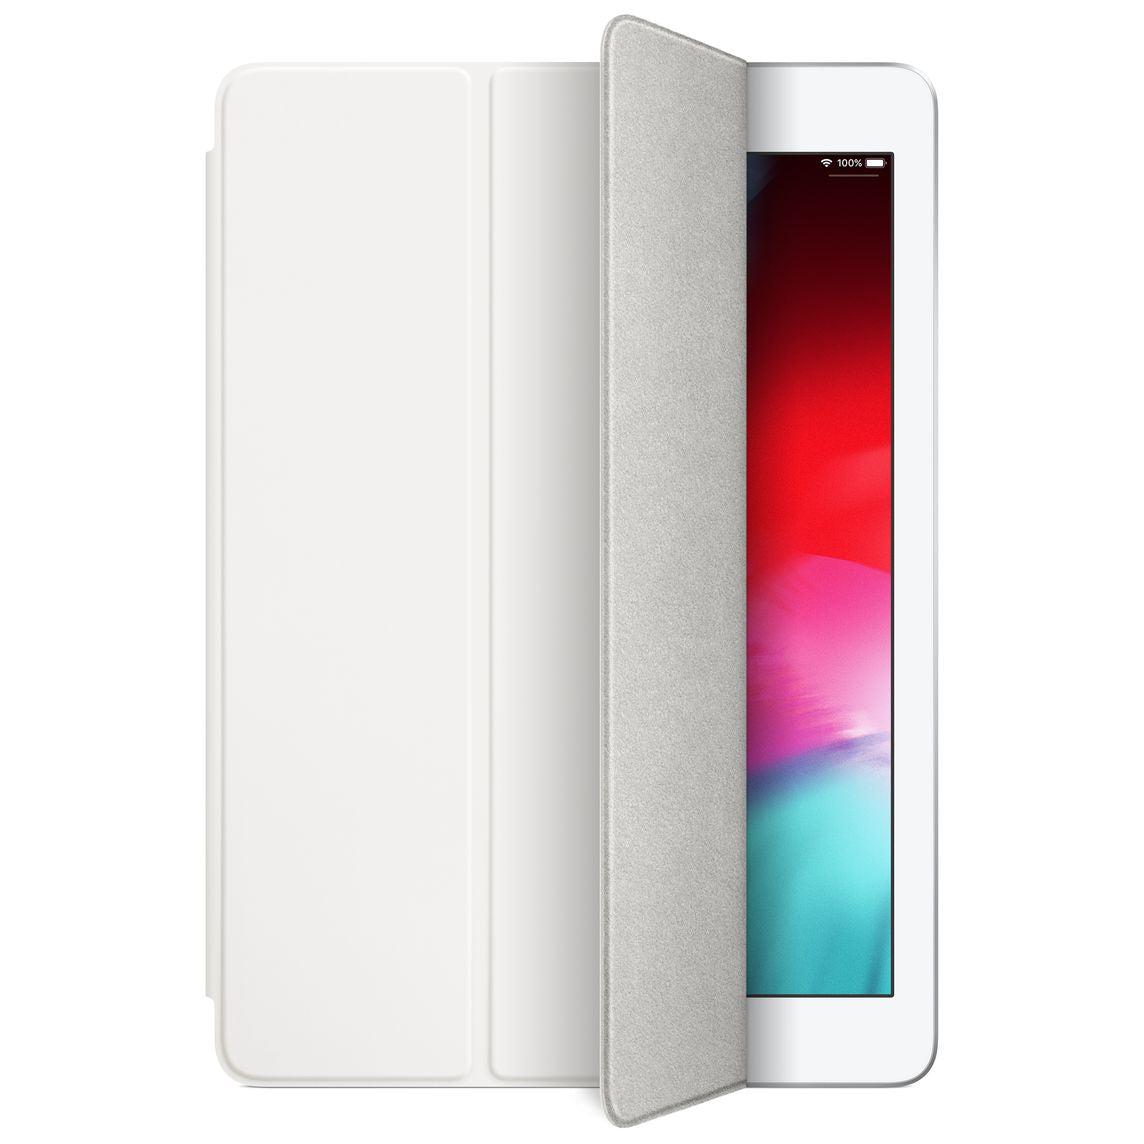 Apple iPad 9.7-inch Smart Cover - White - Refurbished